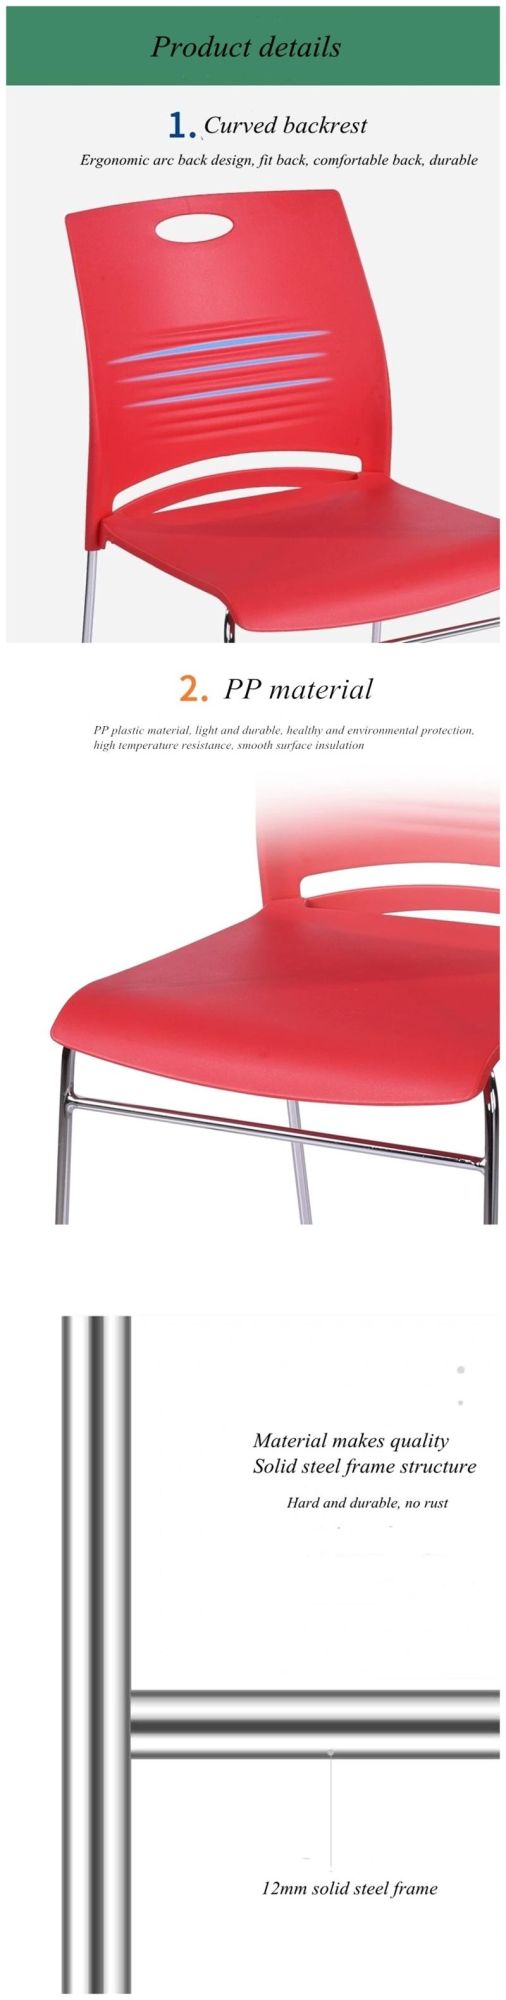 Modern Home Office School Furniture Black Fabric Mesh Training Chair